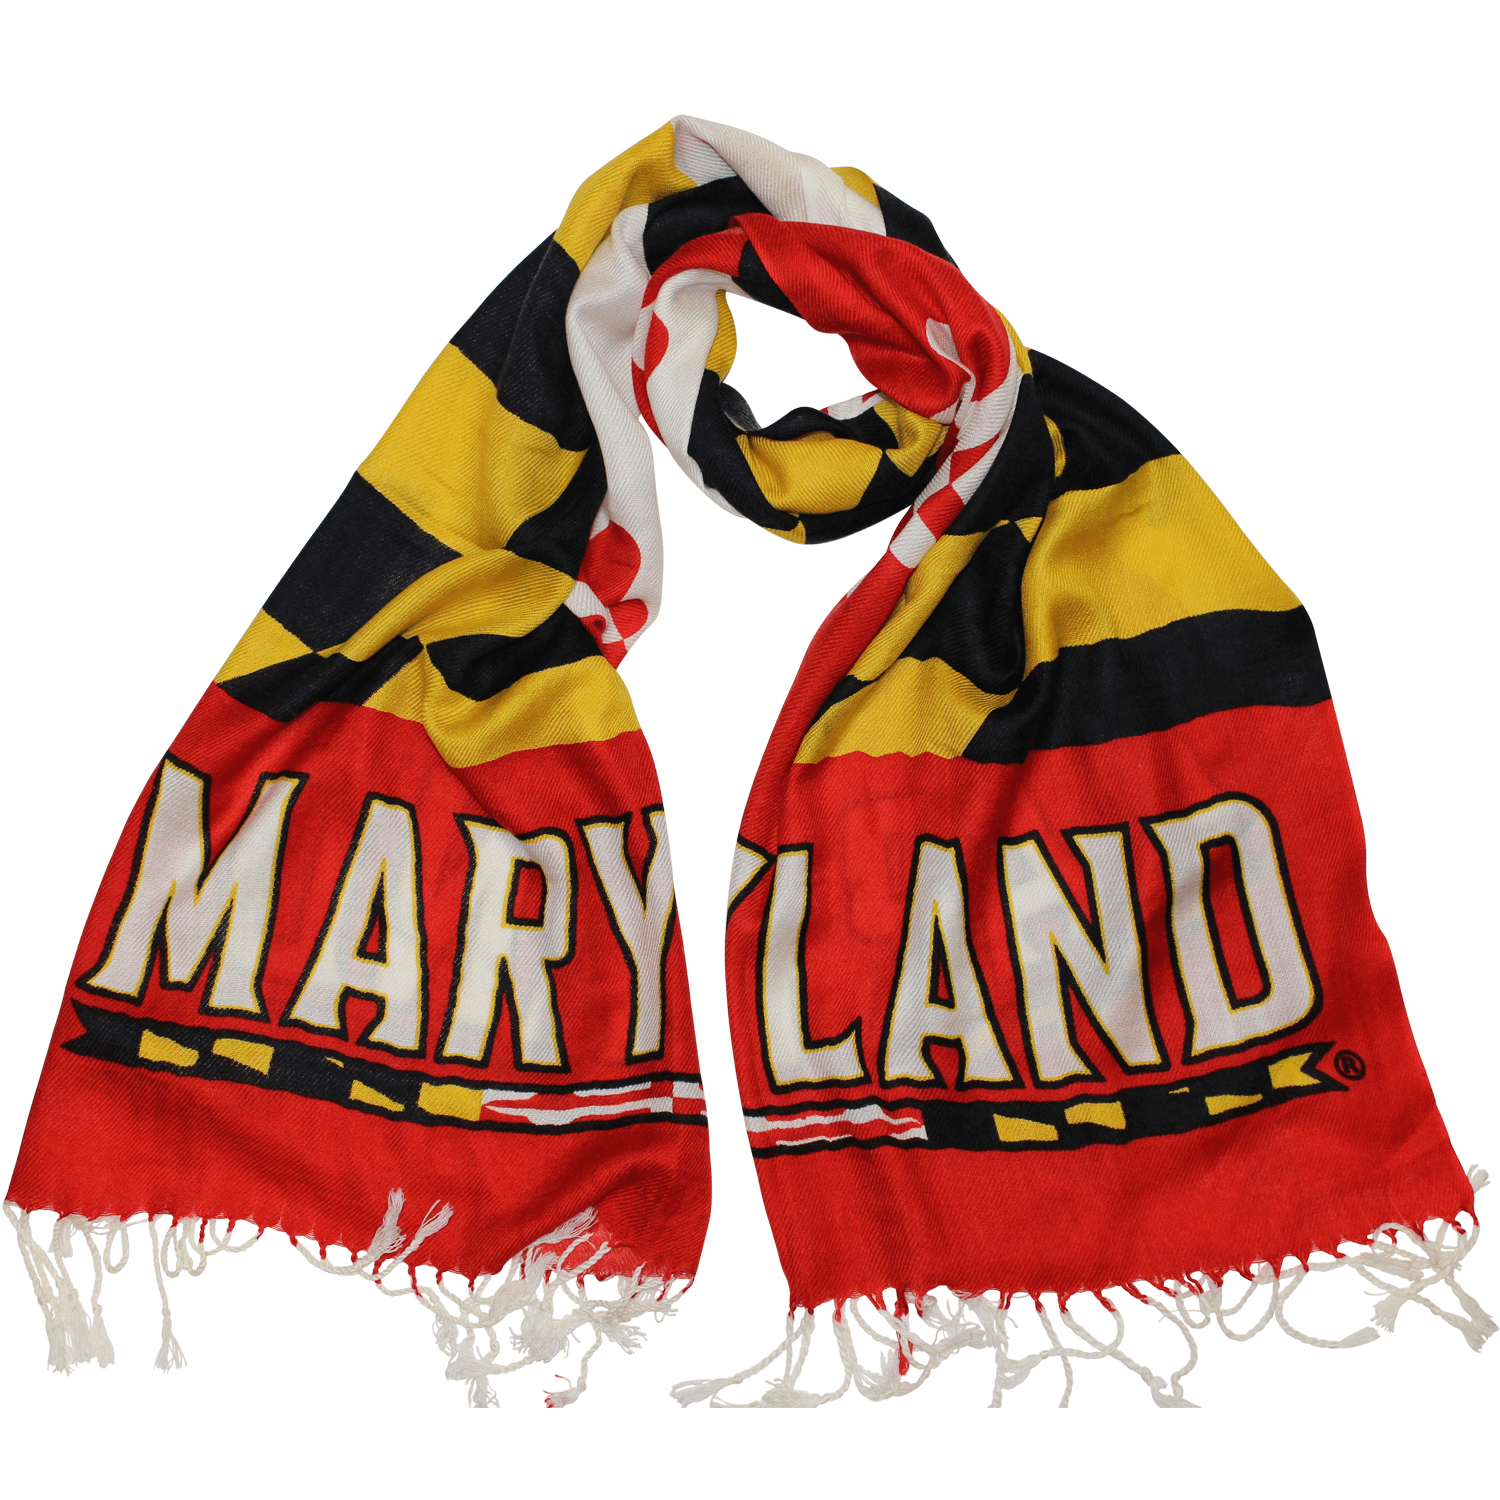 UMD Maryland Athletic Logo & Maryland Flag / Scarf - Route One Apparel